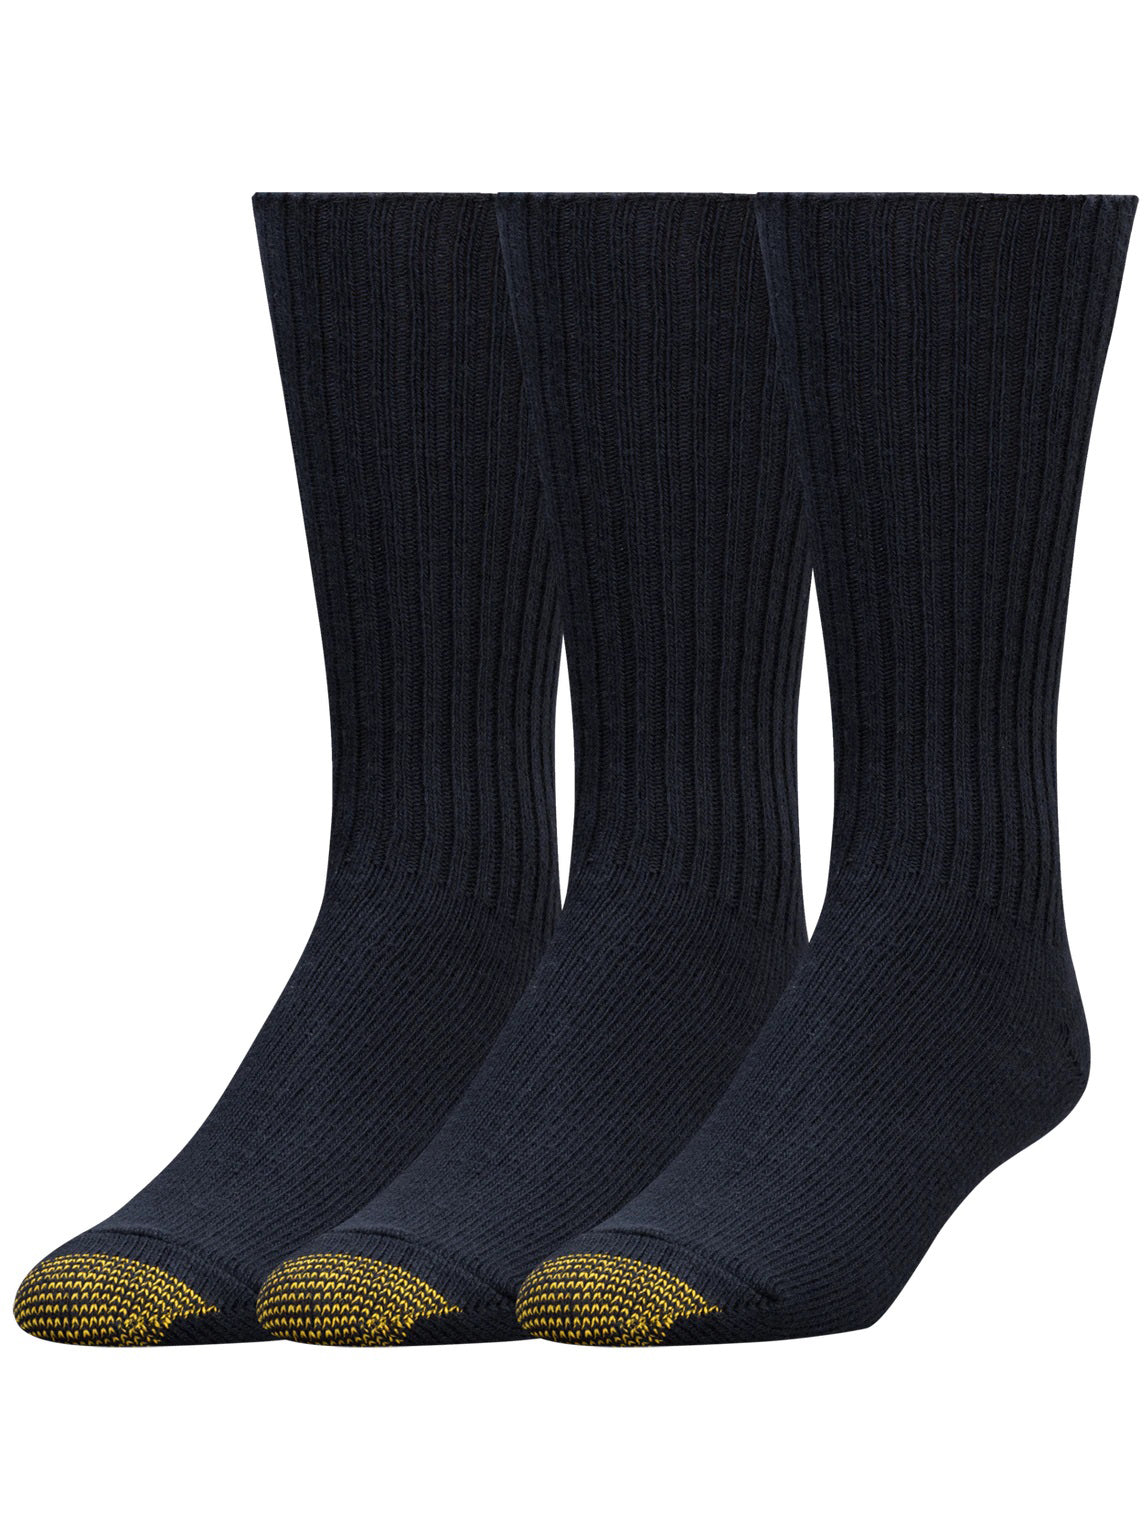 Men's Premium Cotton Fluffies 3-Pack Socks